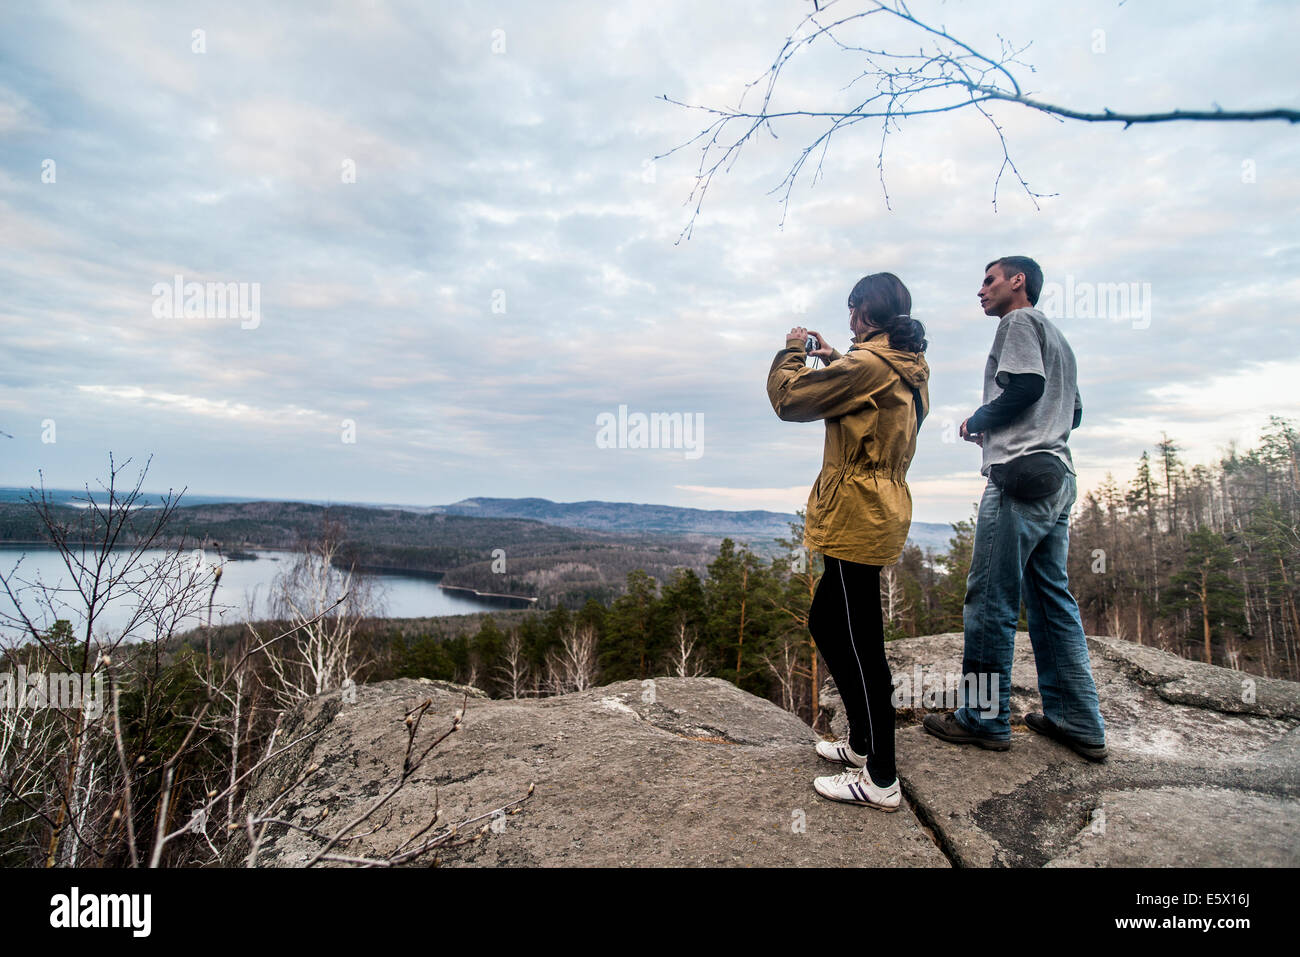 Junges Paar an der Spitze der Felsformation fotografieren Ansicht Stockfoto